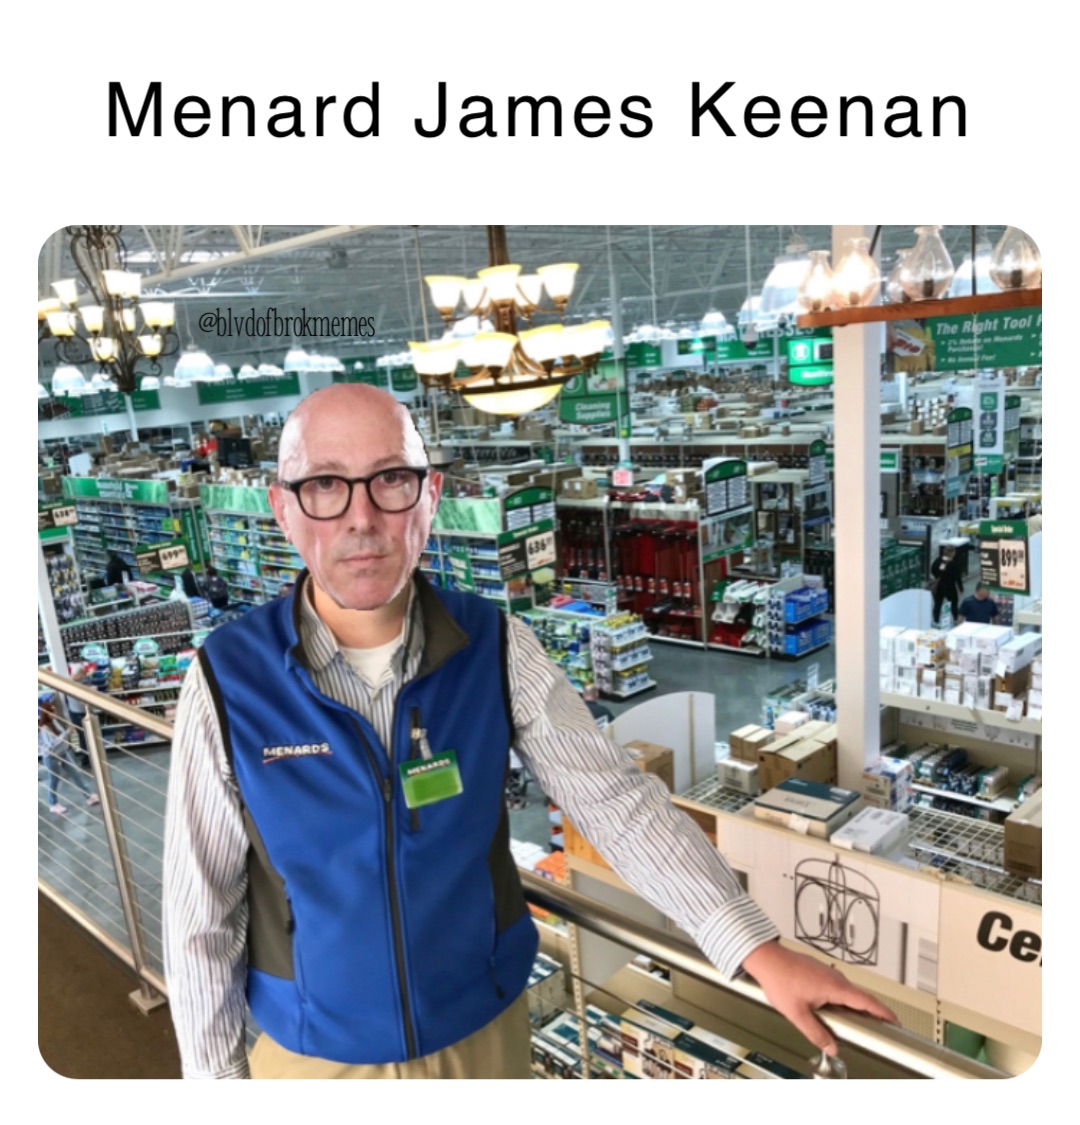 Menard James Keenan